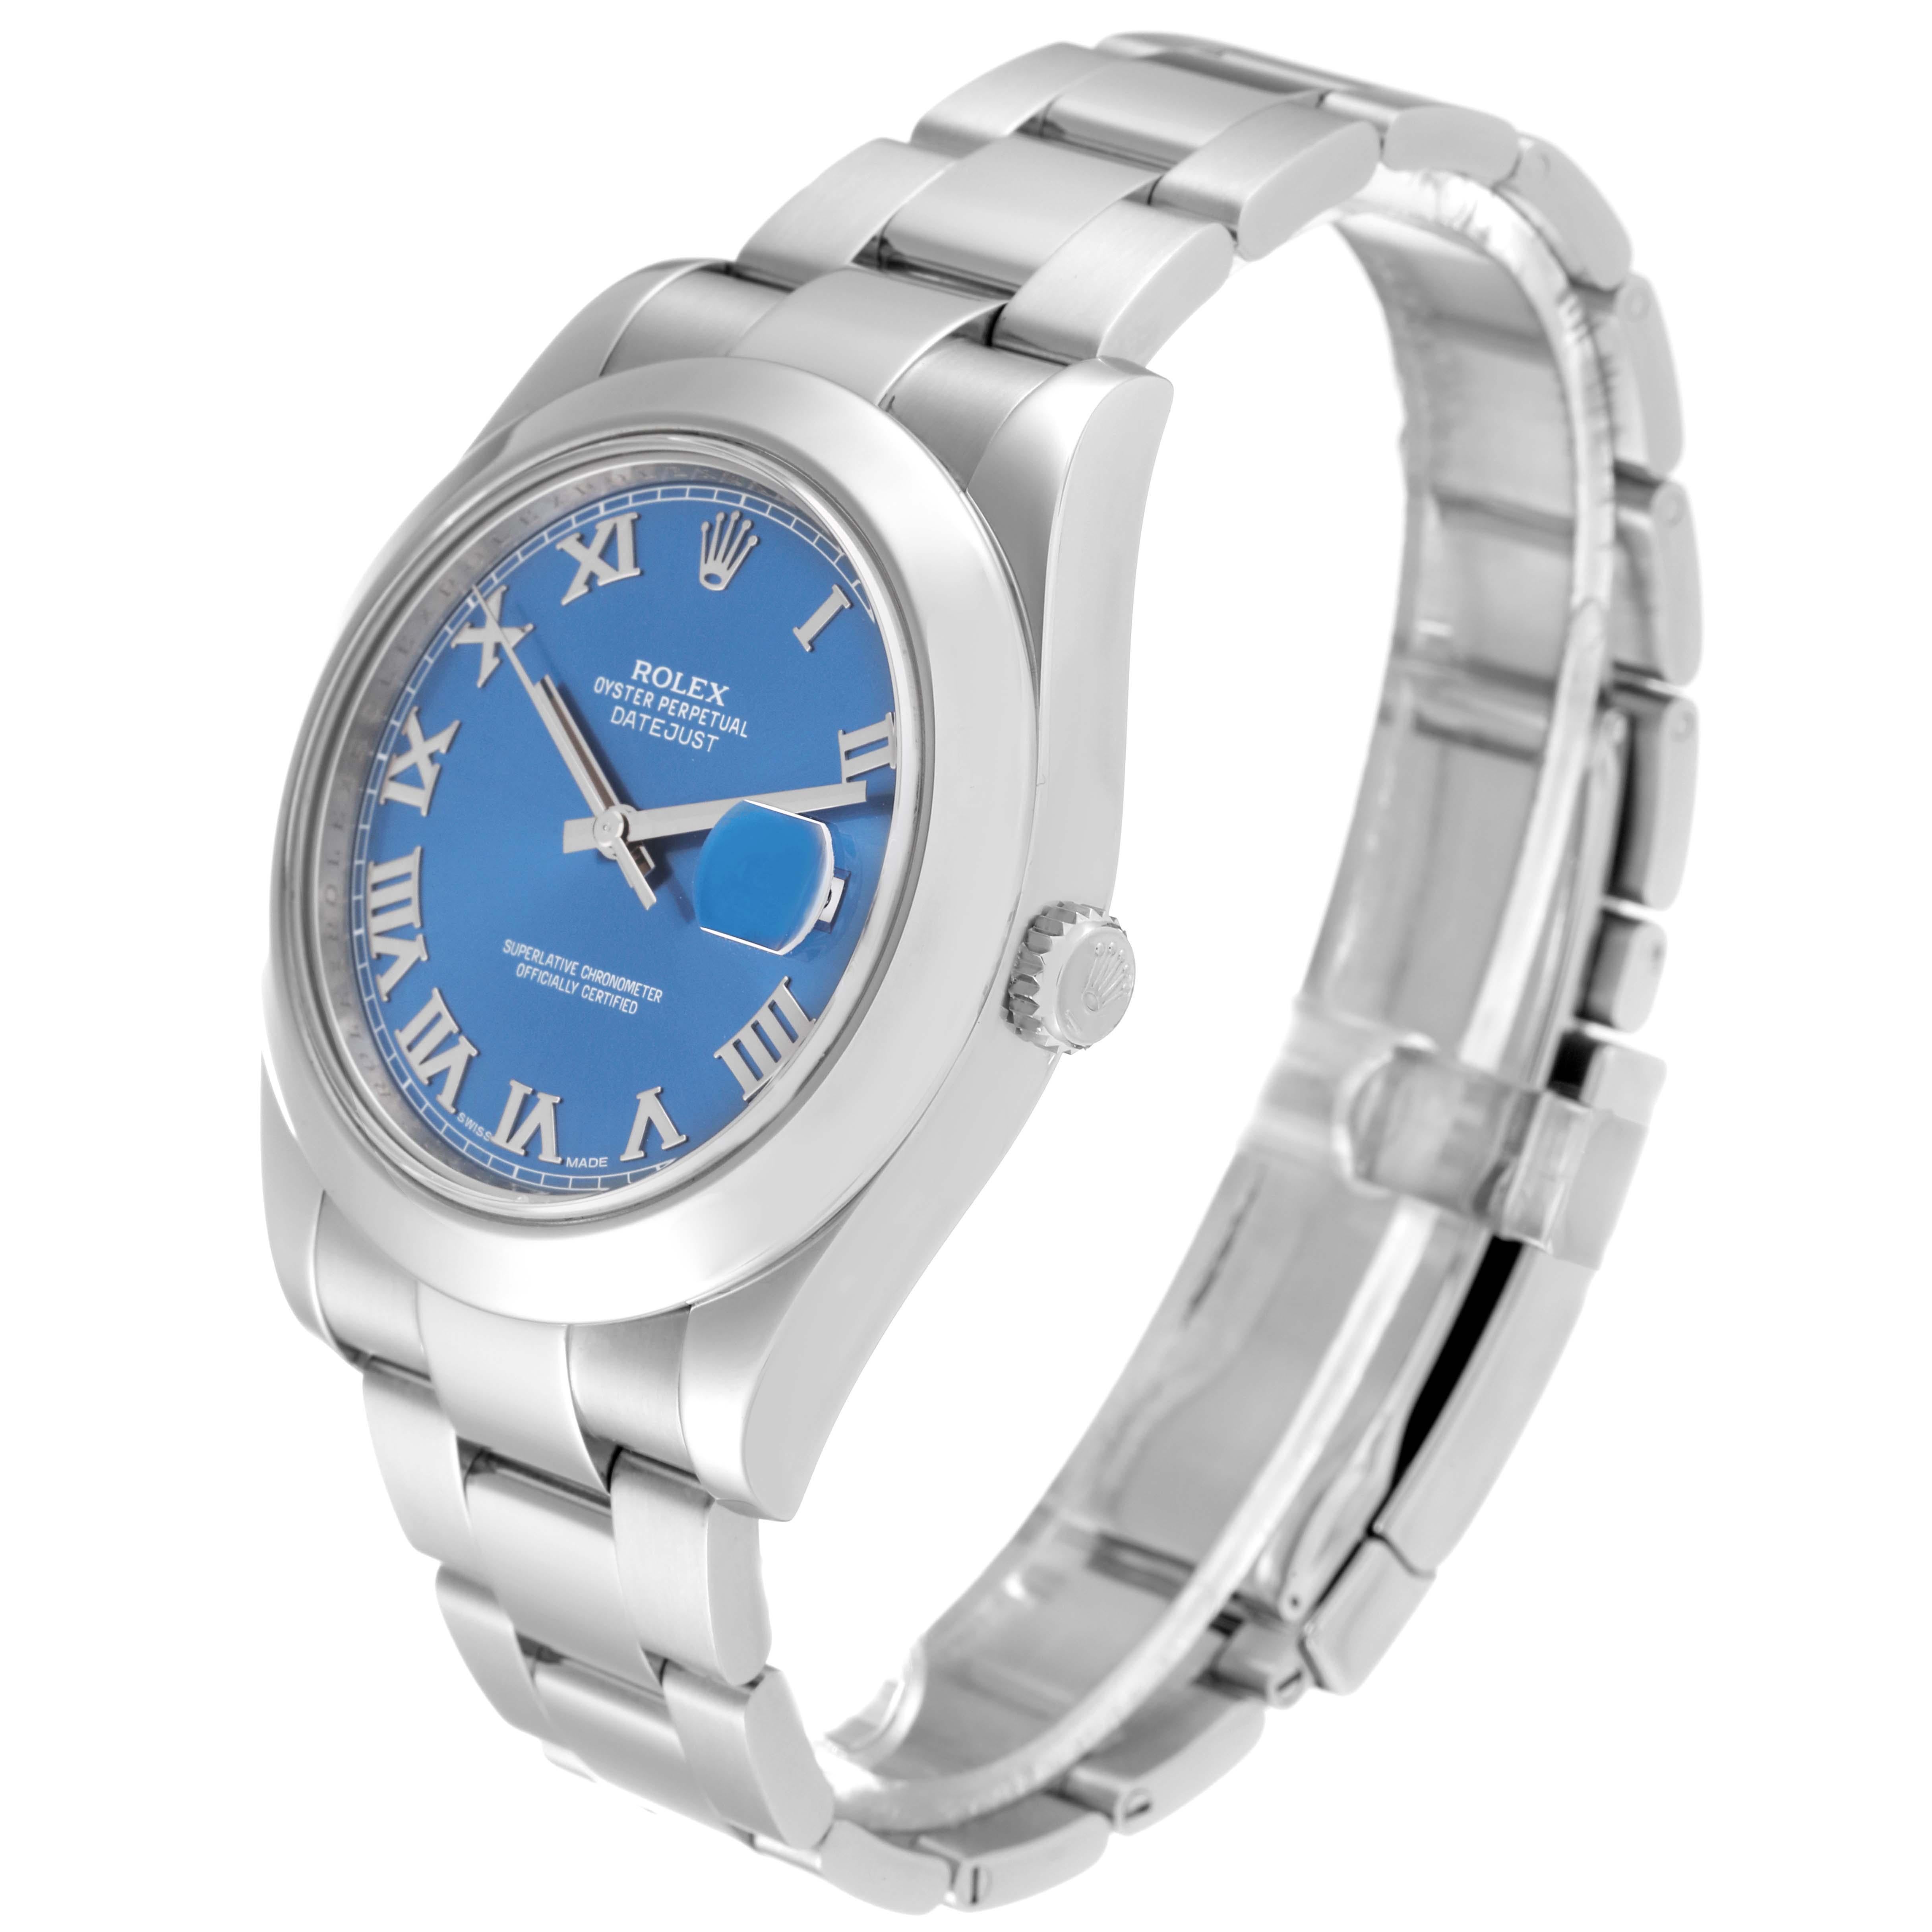 Rolex Datejust II Smooth Bezel Blue Roman Dial Steel Mens Watch 116300 2